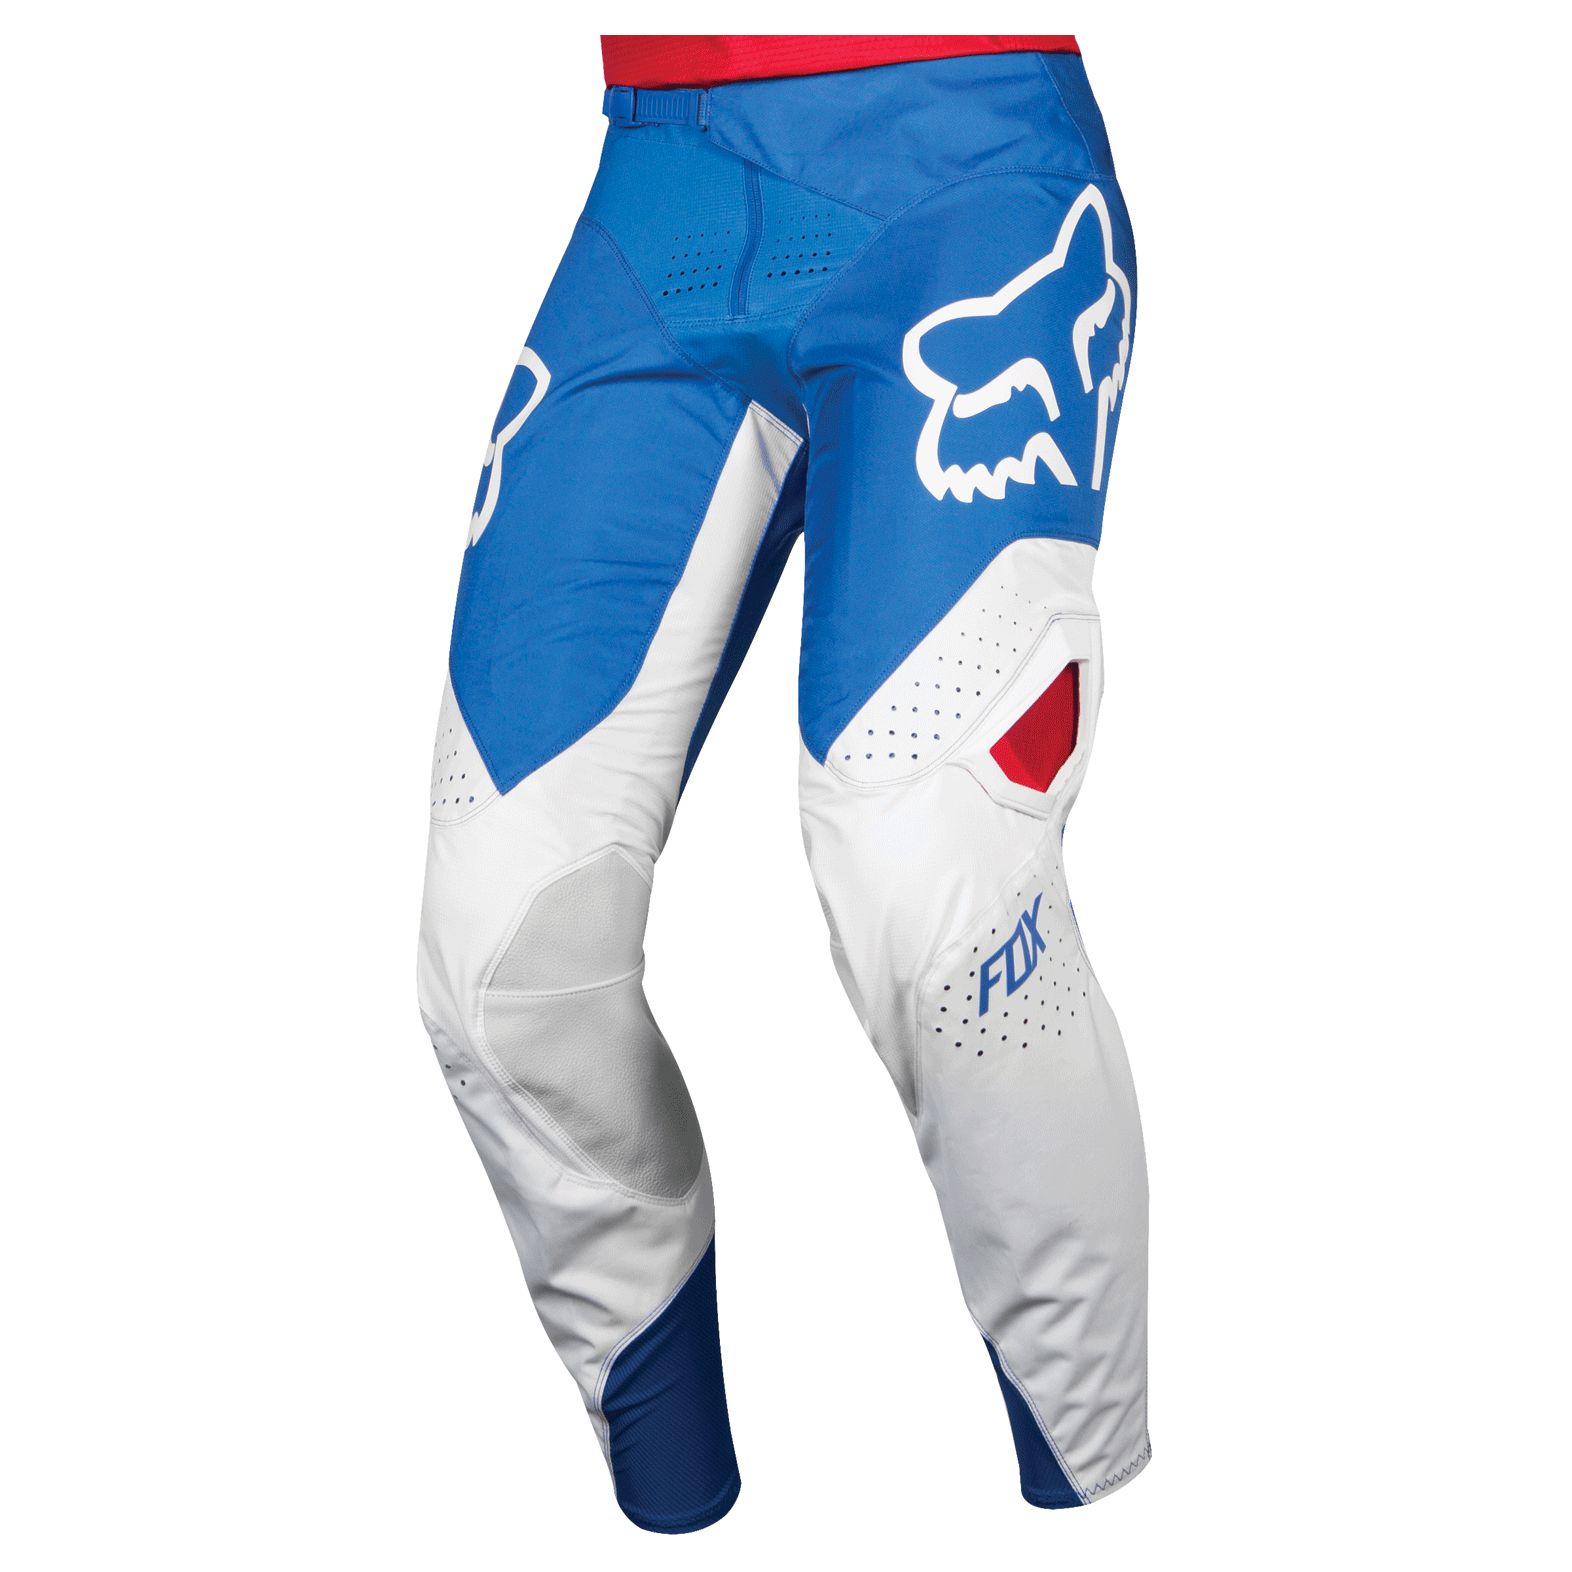 Pantaloni da cross Fox destockage 360 - KILA - BLUE RED 2019